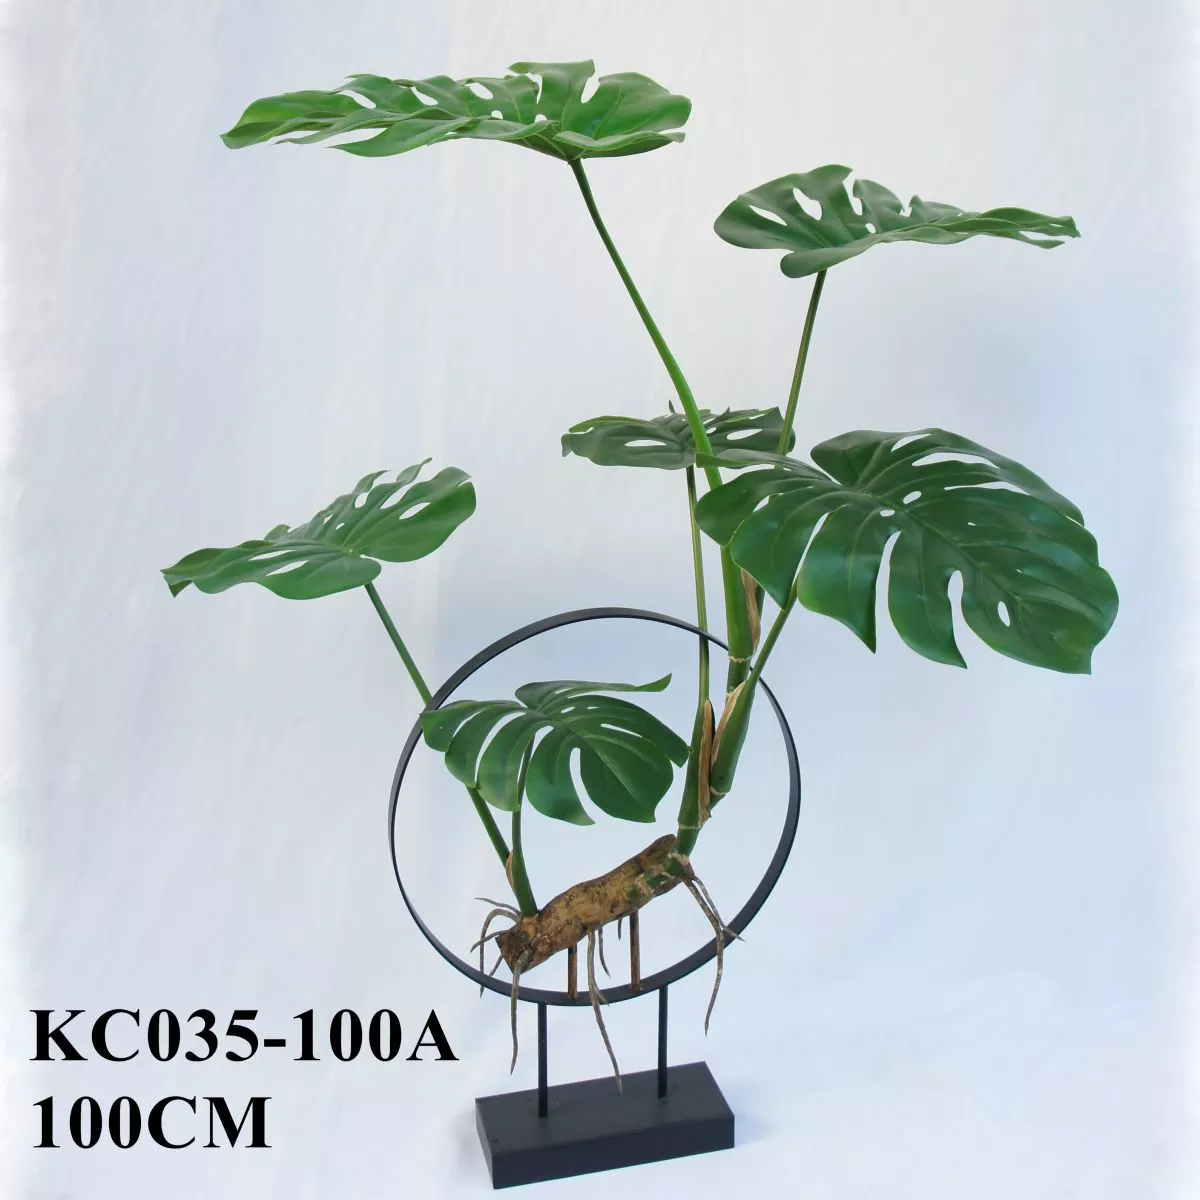 Artificial Monstera Adansonii Plant, 100CM